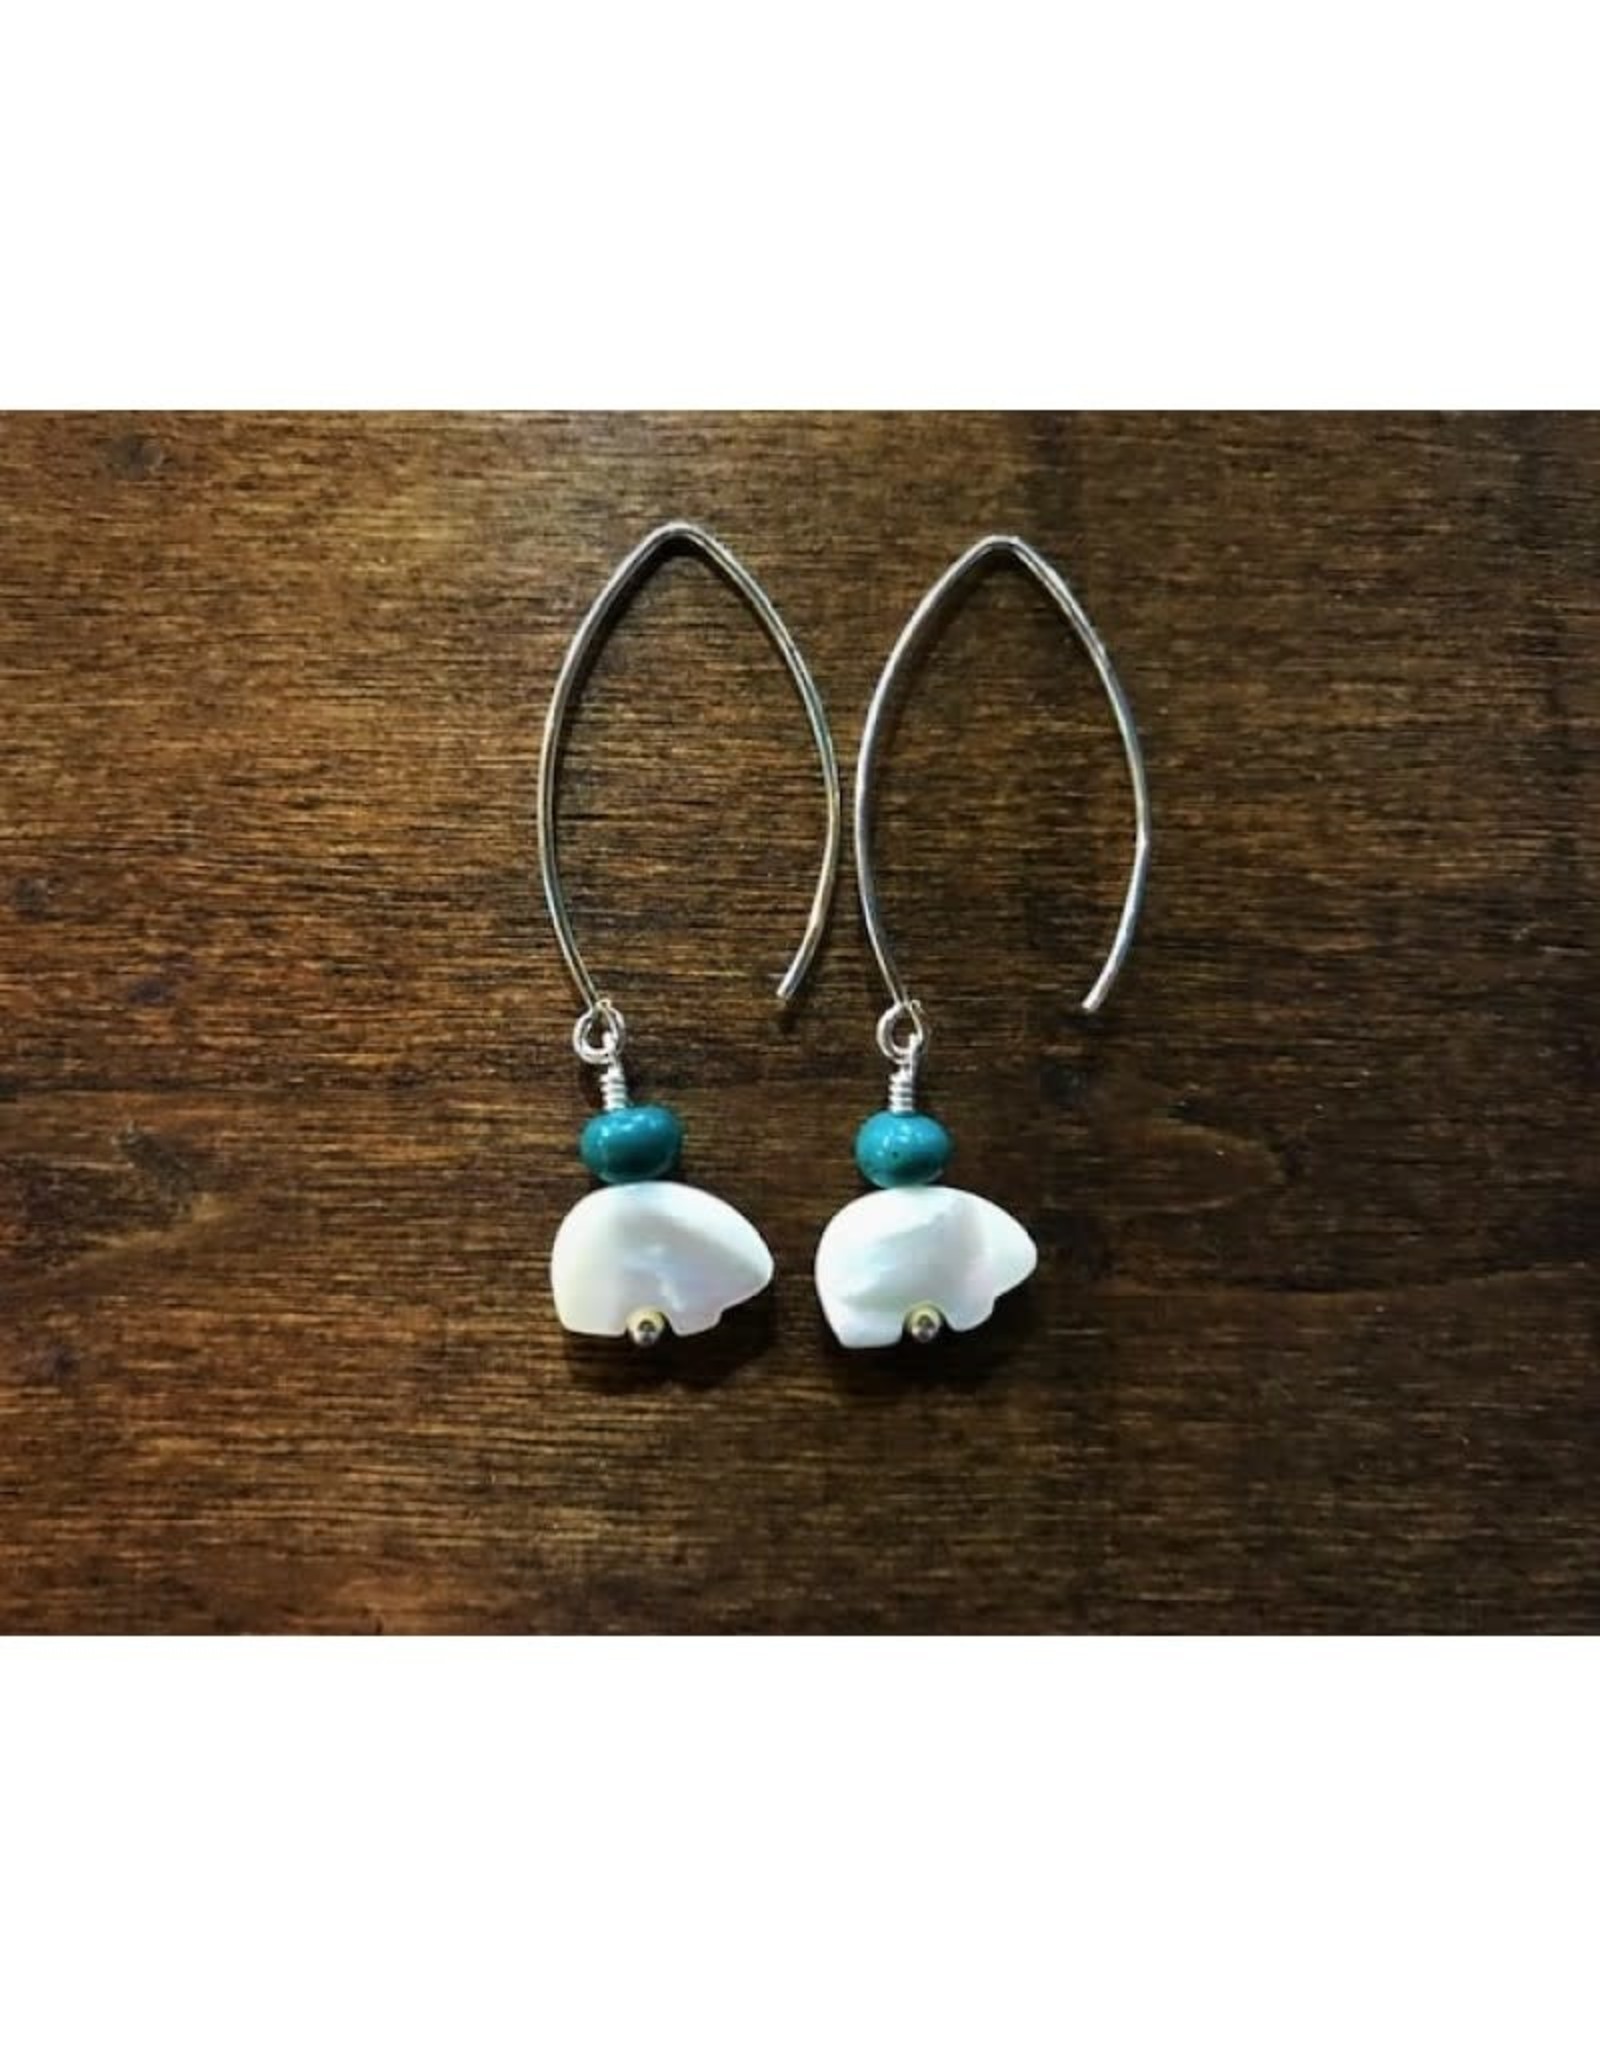 Dangle Earrings - Leland Blue & Pearl Bear